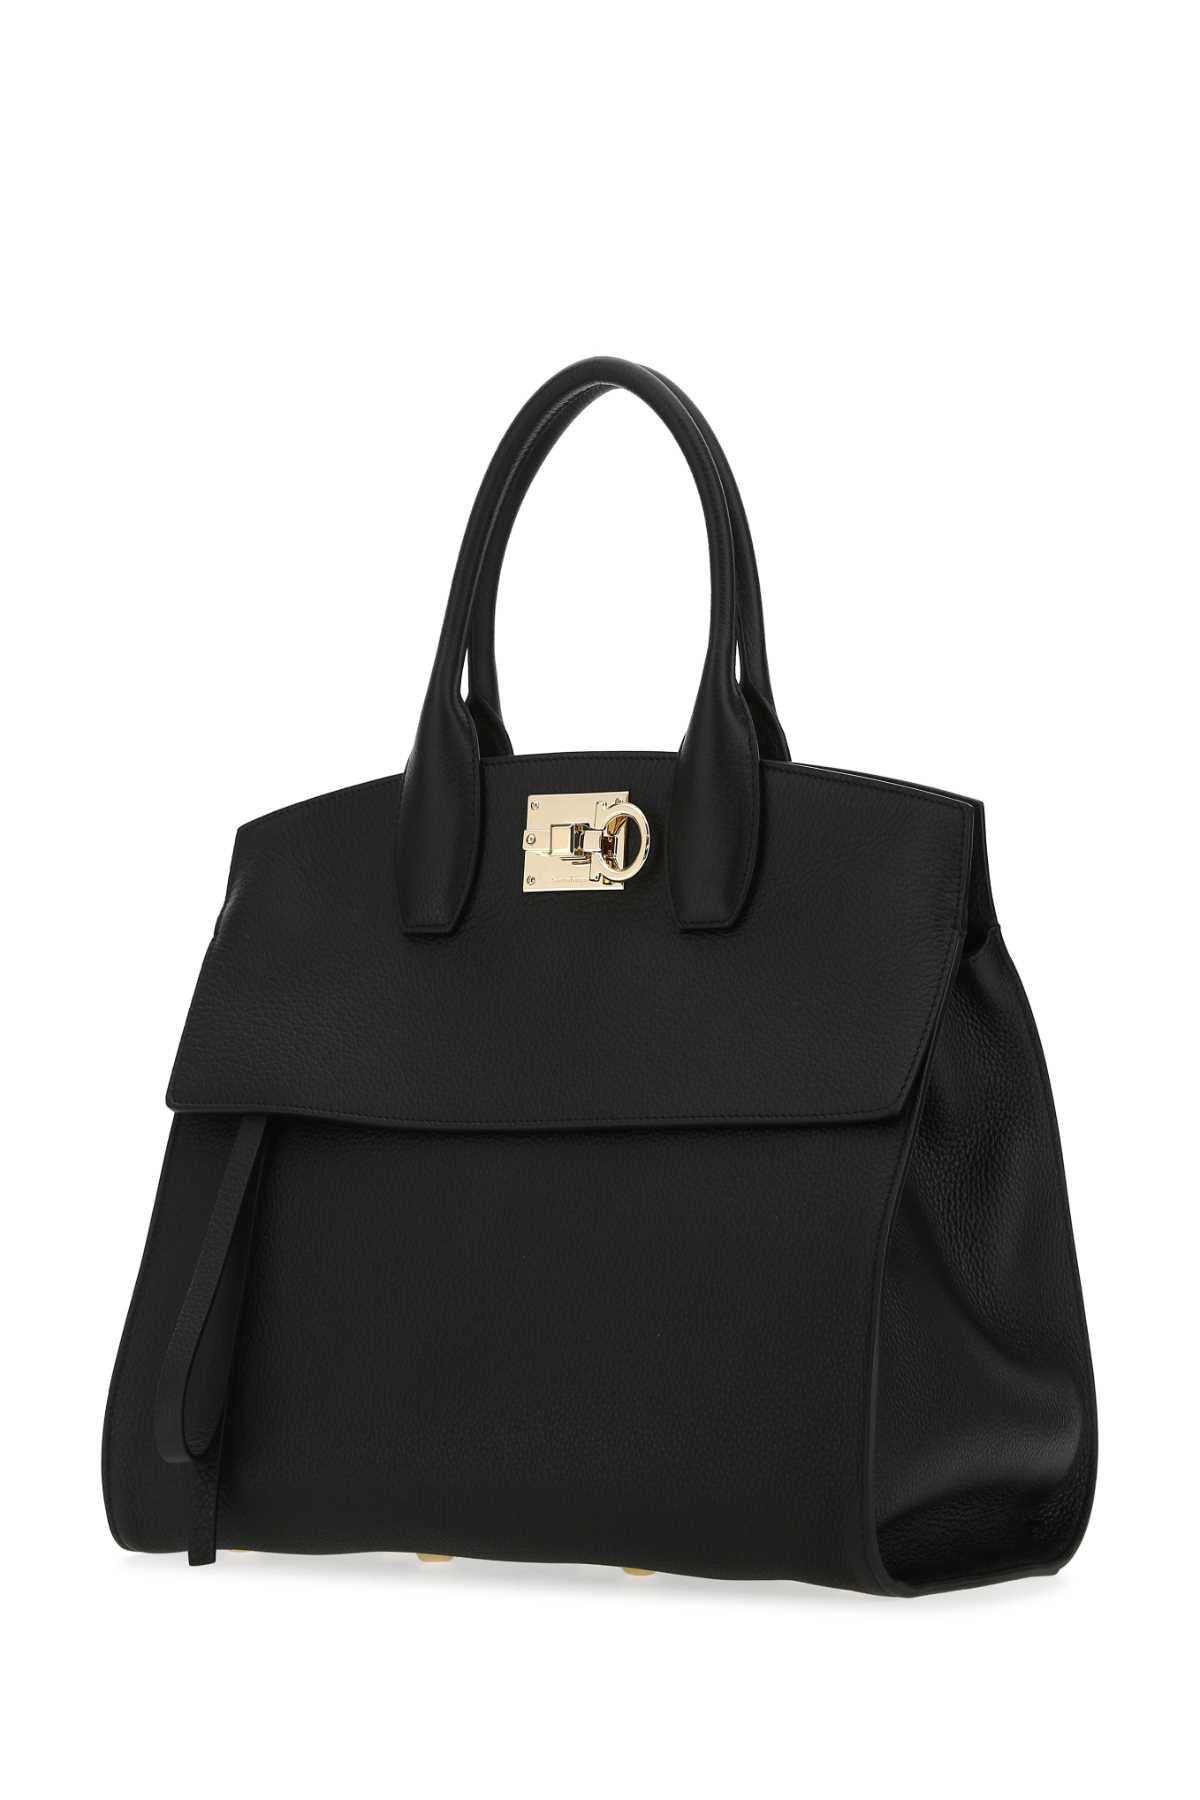 Ferragamo Black Leather Studio Handbag In Nero